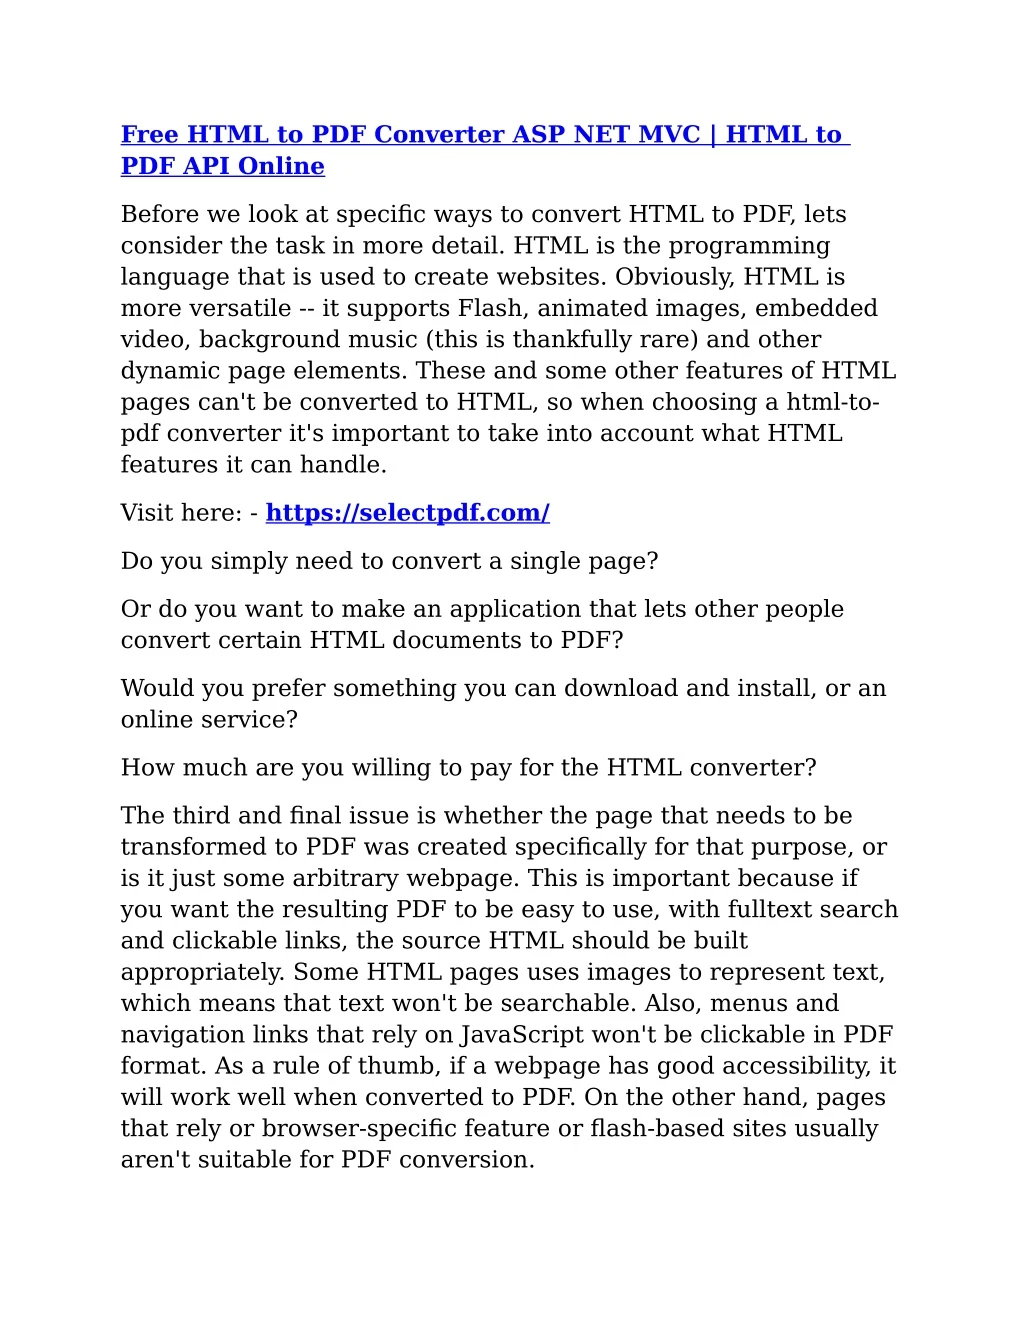 free html to pdf converter asp net mvc html